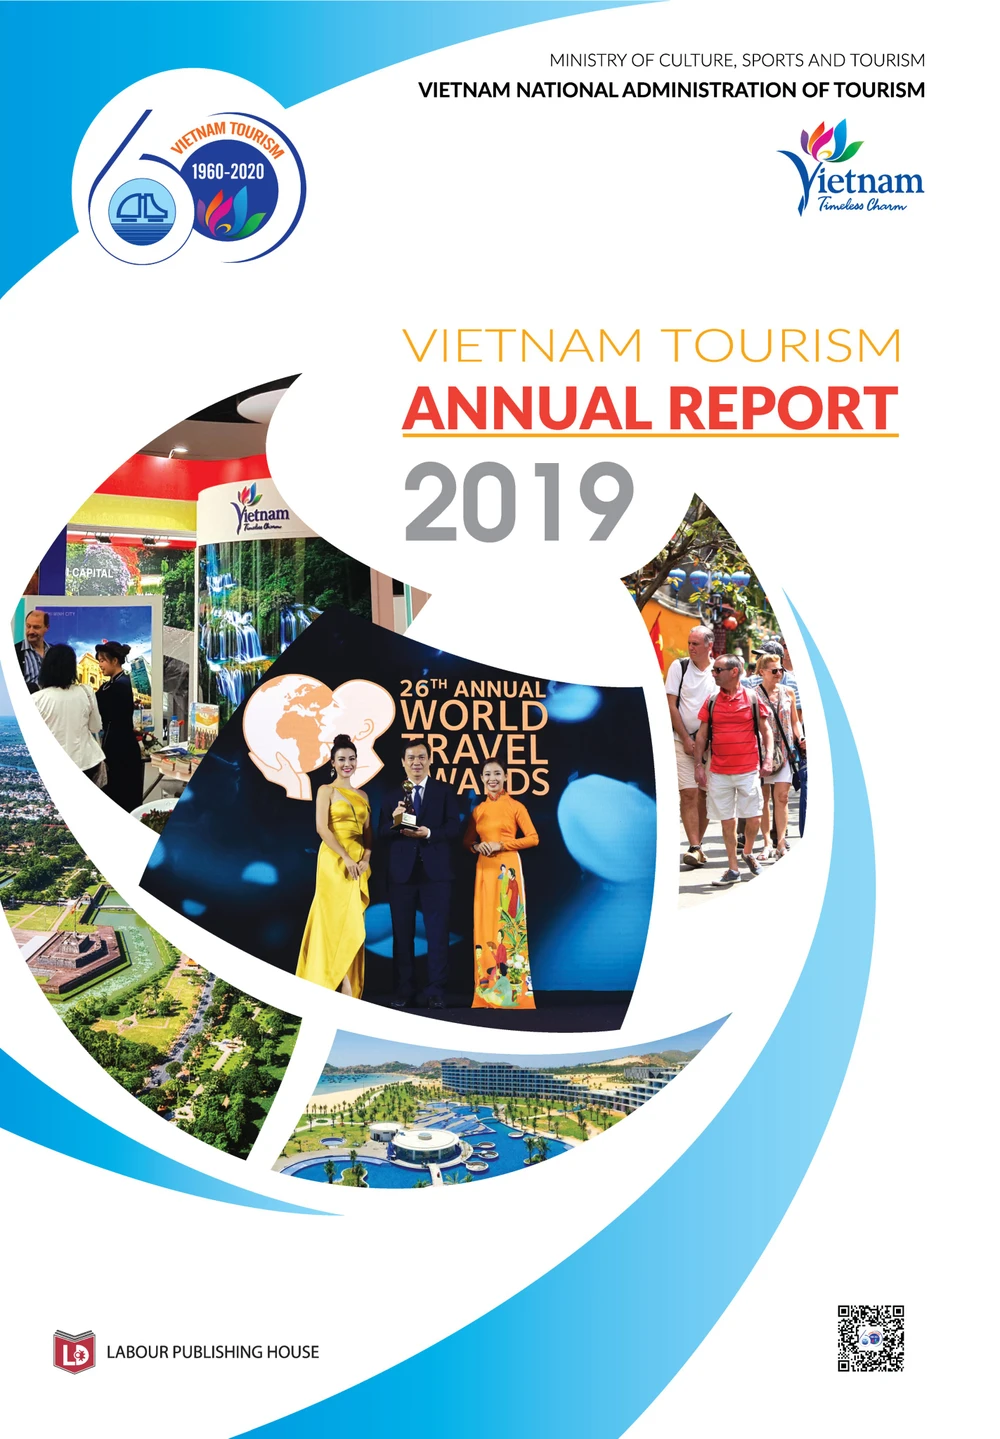 Vietnam Tourism Annual Report 2019 released ảnh 1